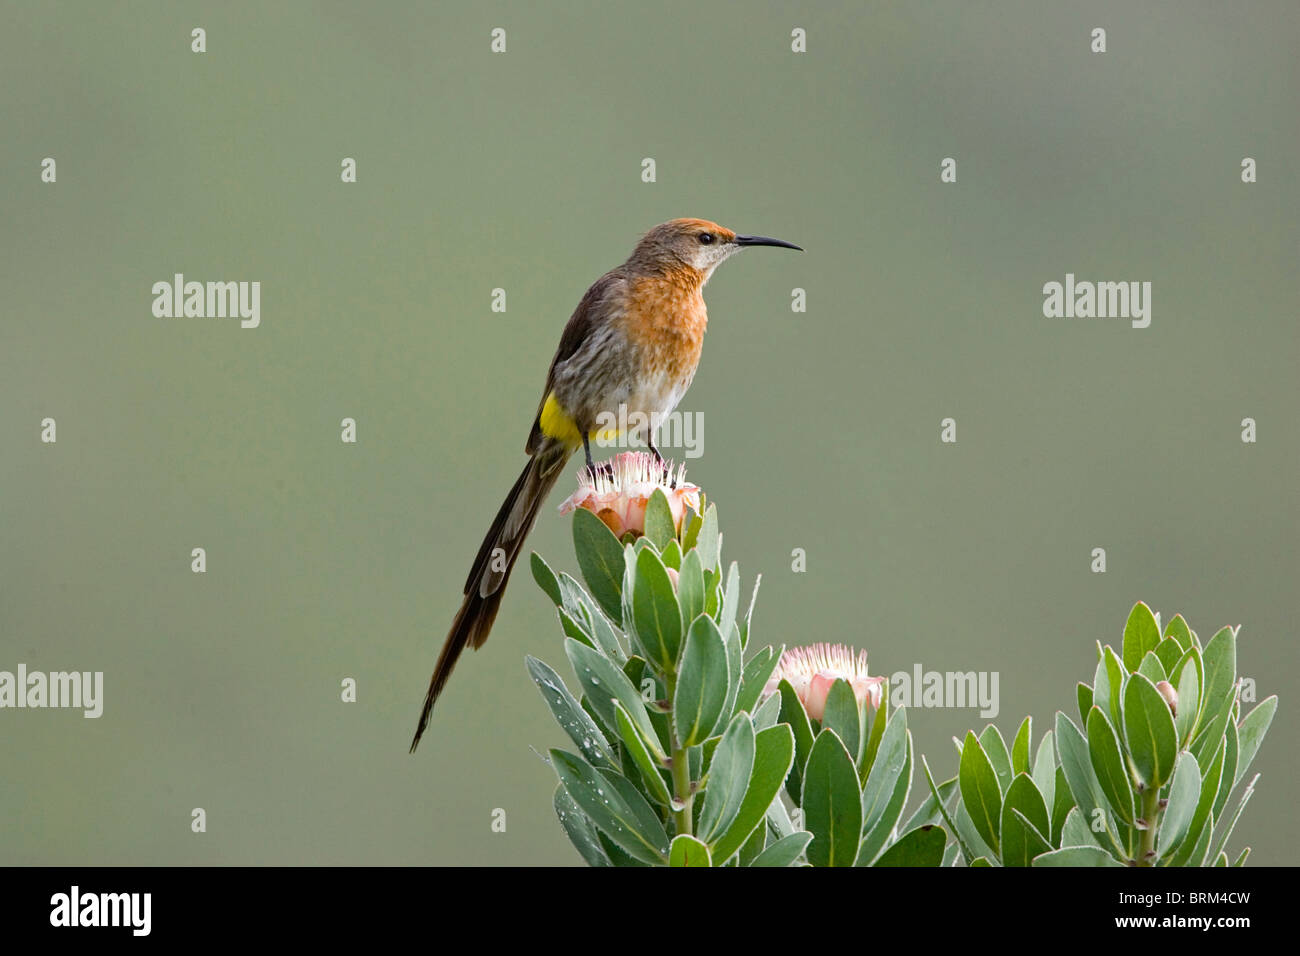 Gurneys Sugarbird perched on a Protea Stock Photo